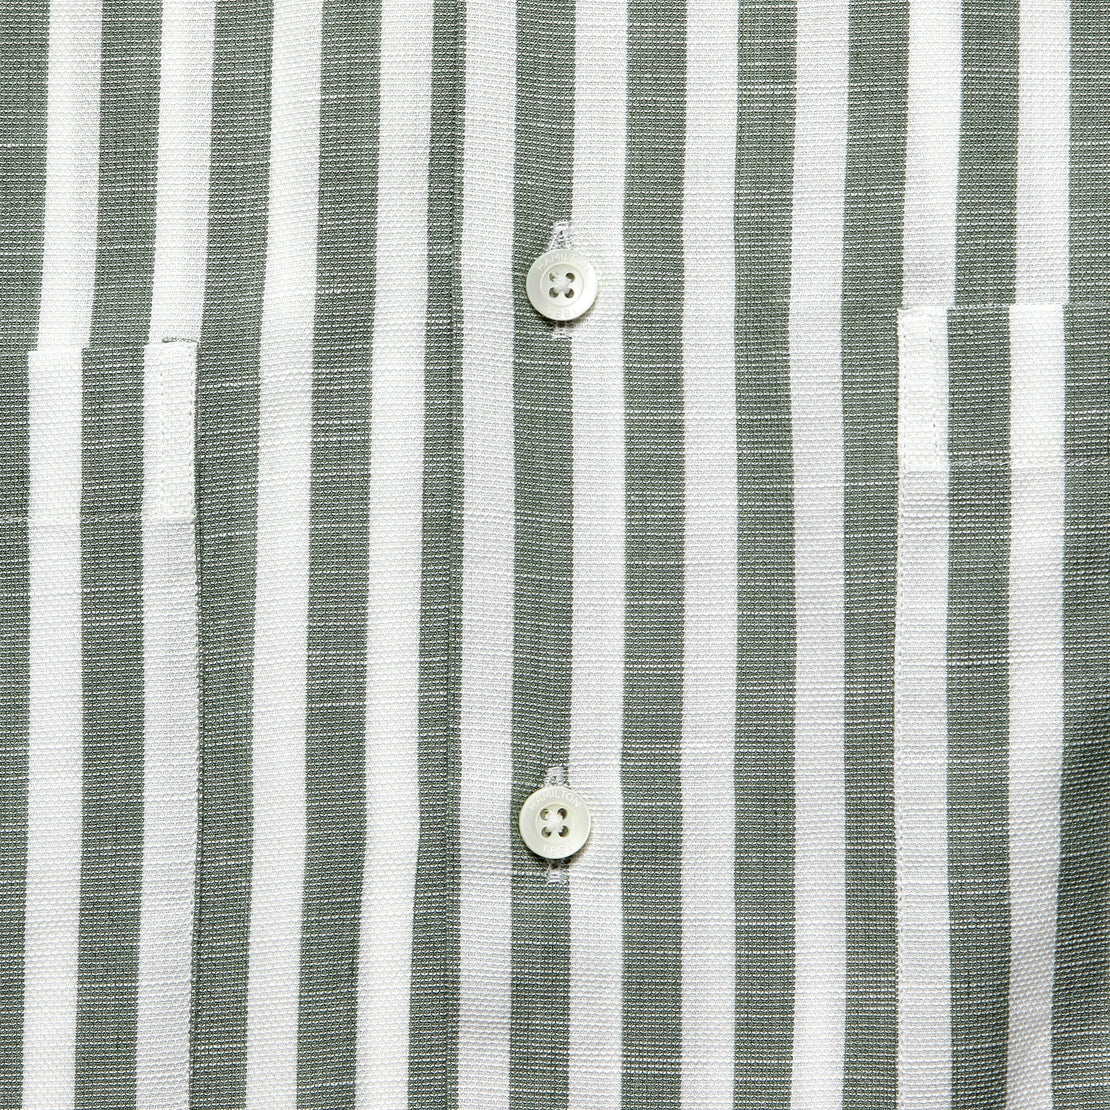 Bengal Stripe Guayabera - Green/White - Hamilton Shirt Co. - STAG Provisions - Tops - S/S Woven - Stripe